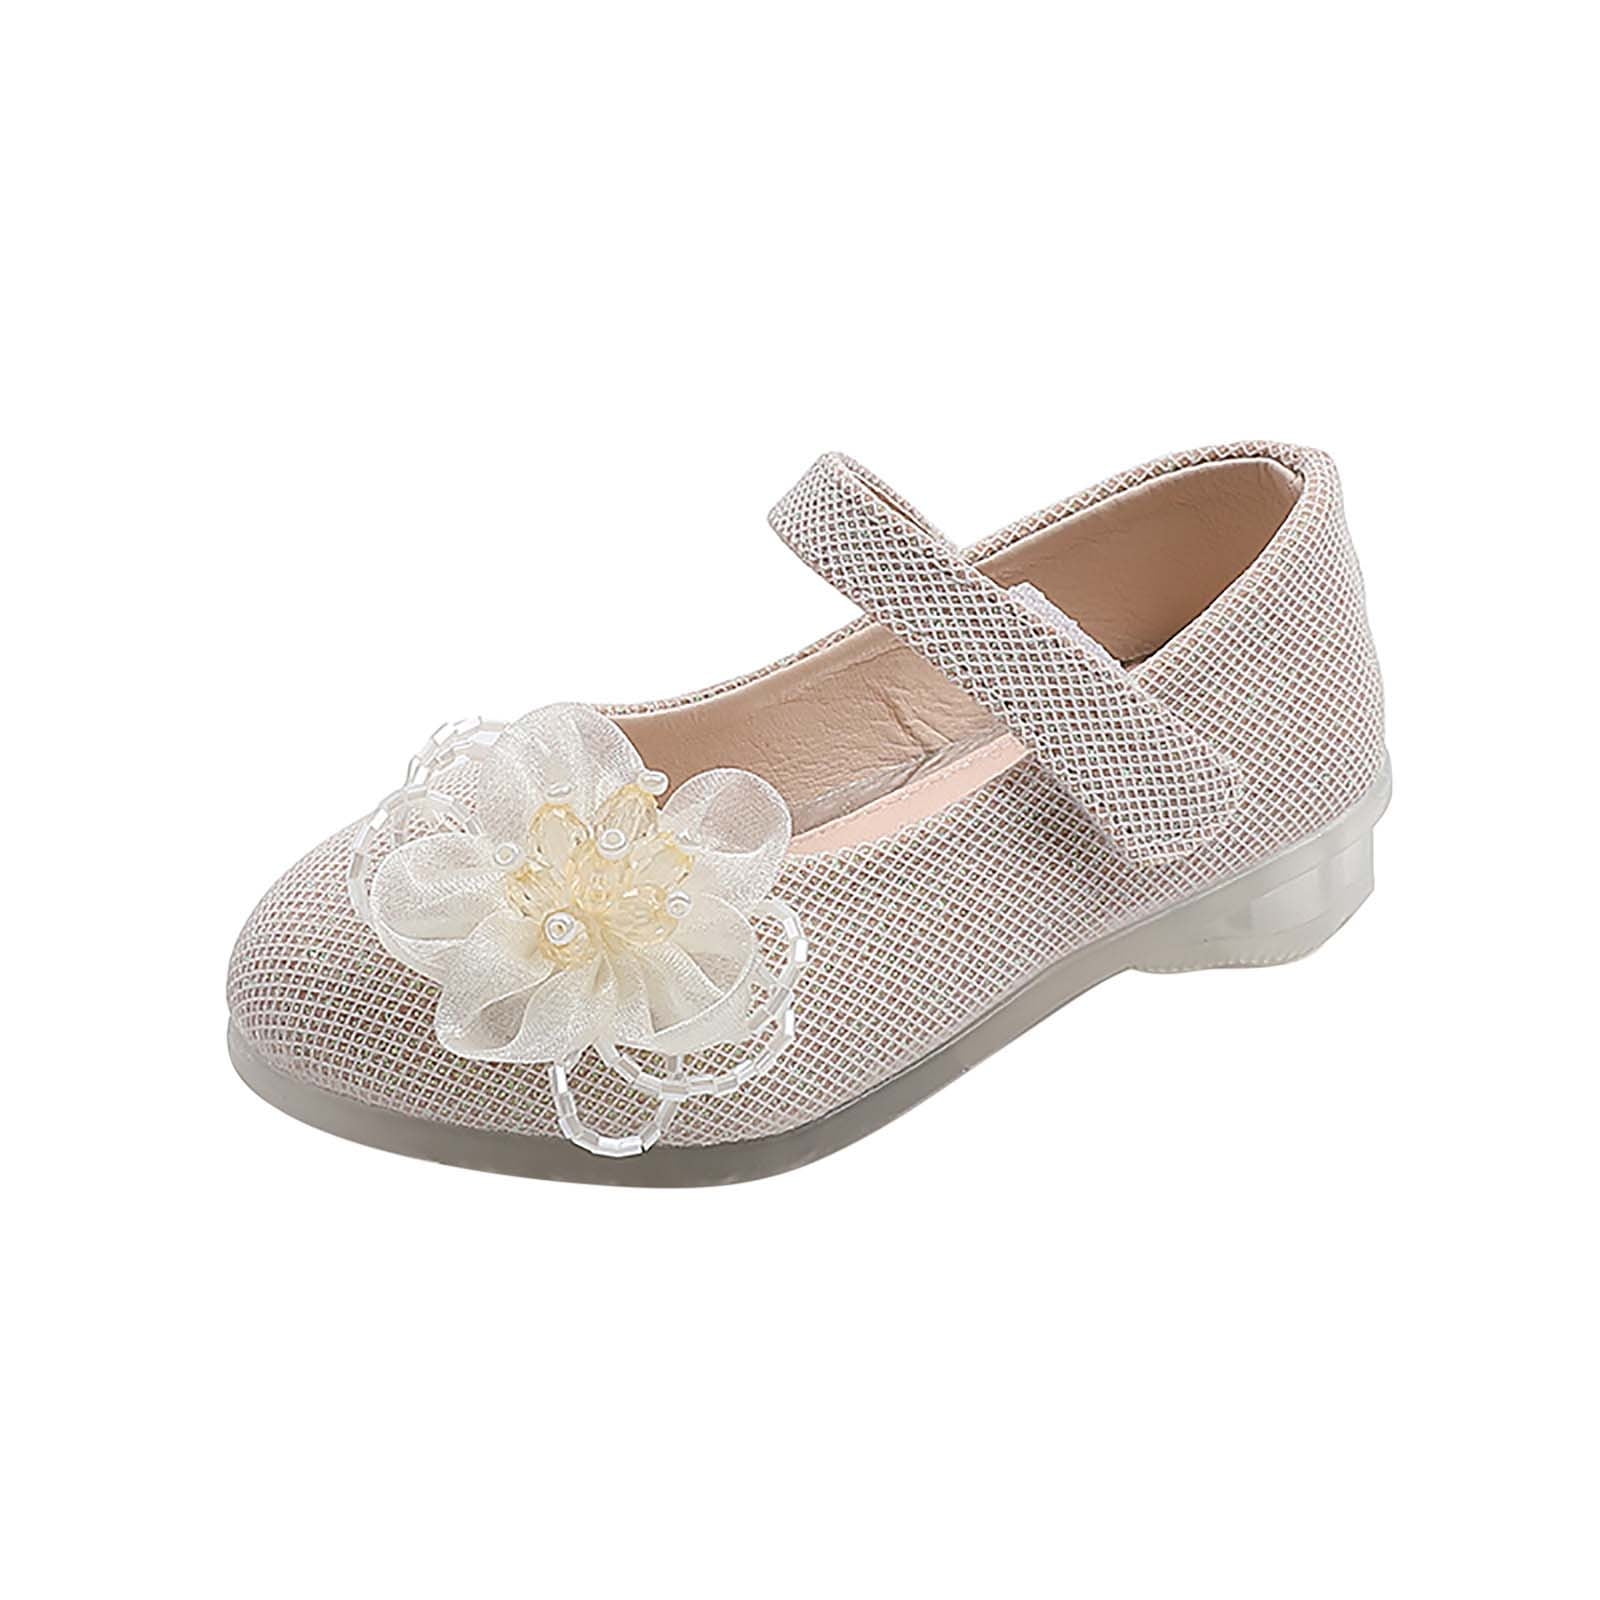 Kids Dress Sandals Strappy Rhinestone Flower Clear High Heel Shoes Pink |  eBay